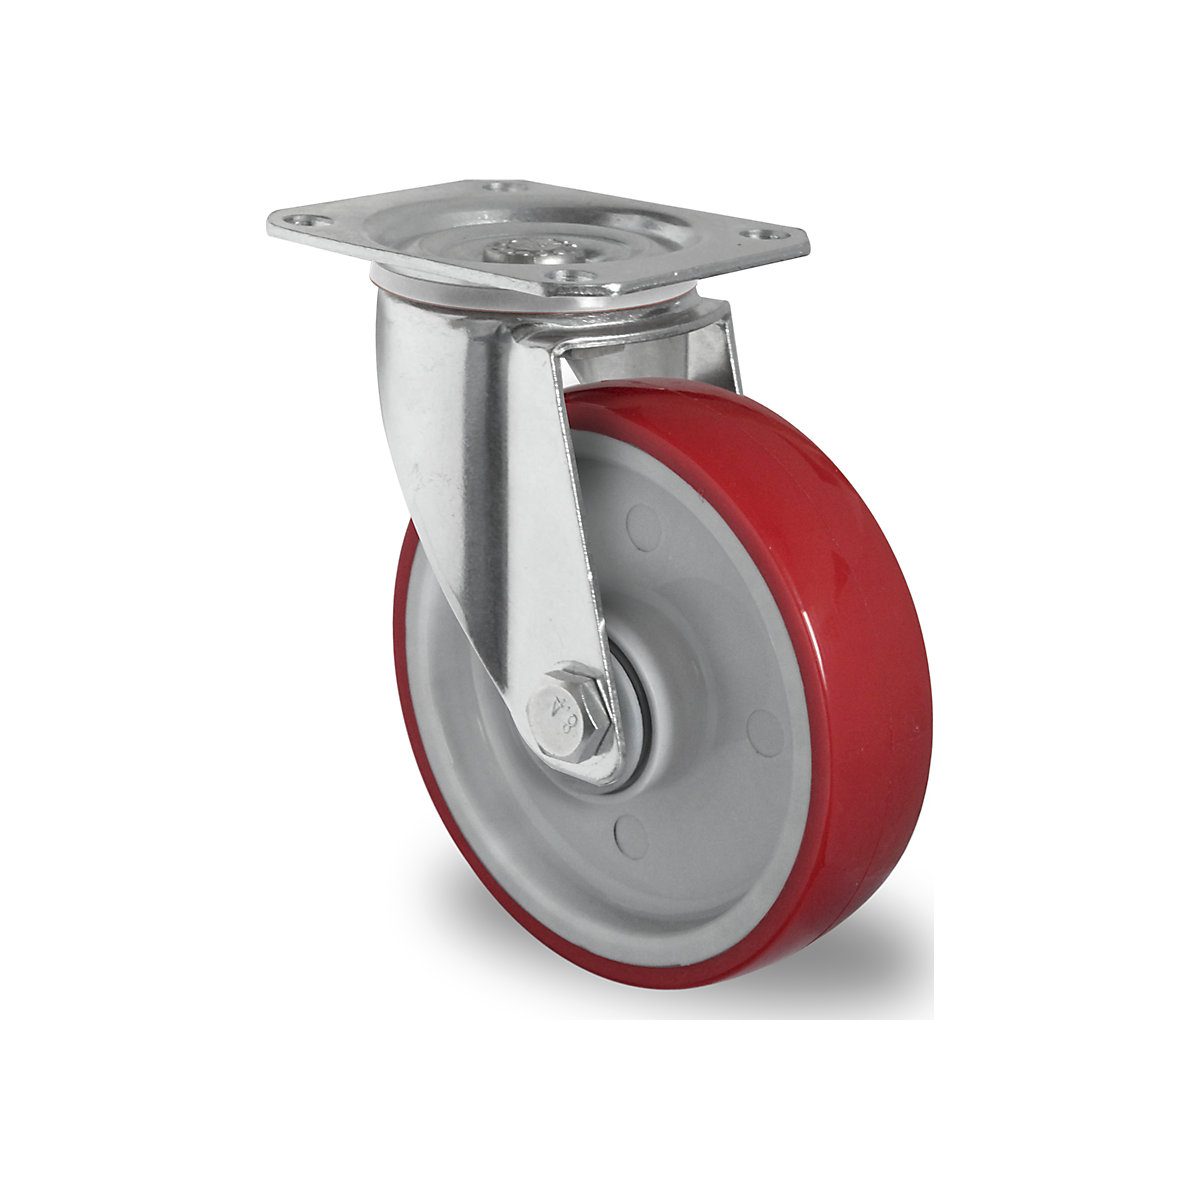 EUROKRAFTbasic – PU tyre, red on nylon rim, wheel Ø x width 200 x 46 mm, 2+ items, swivel castor